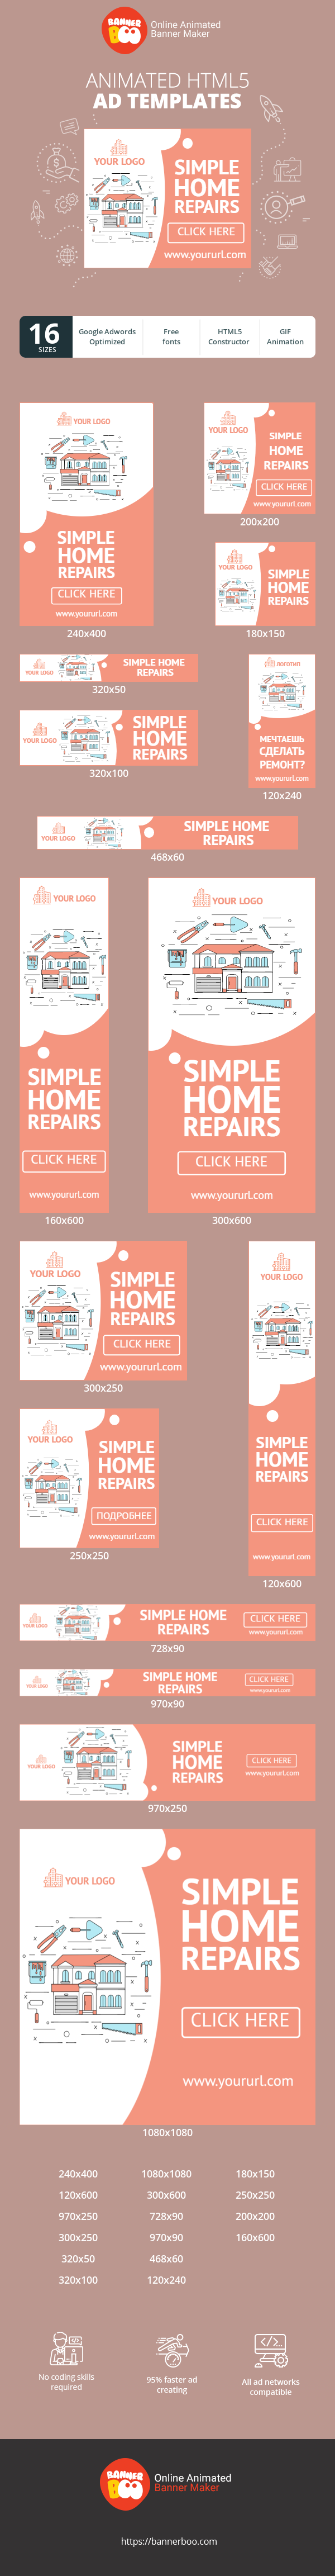 Szablon reklamy banerowej — Simple Home Repairs